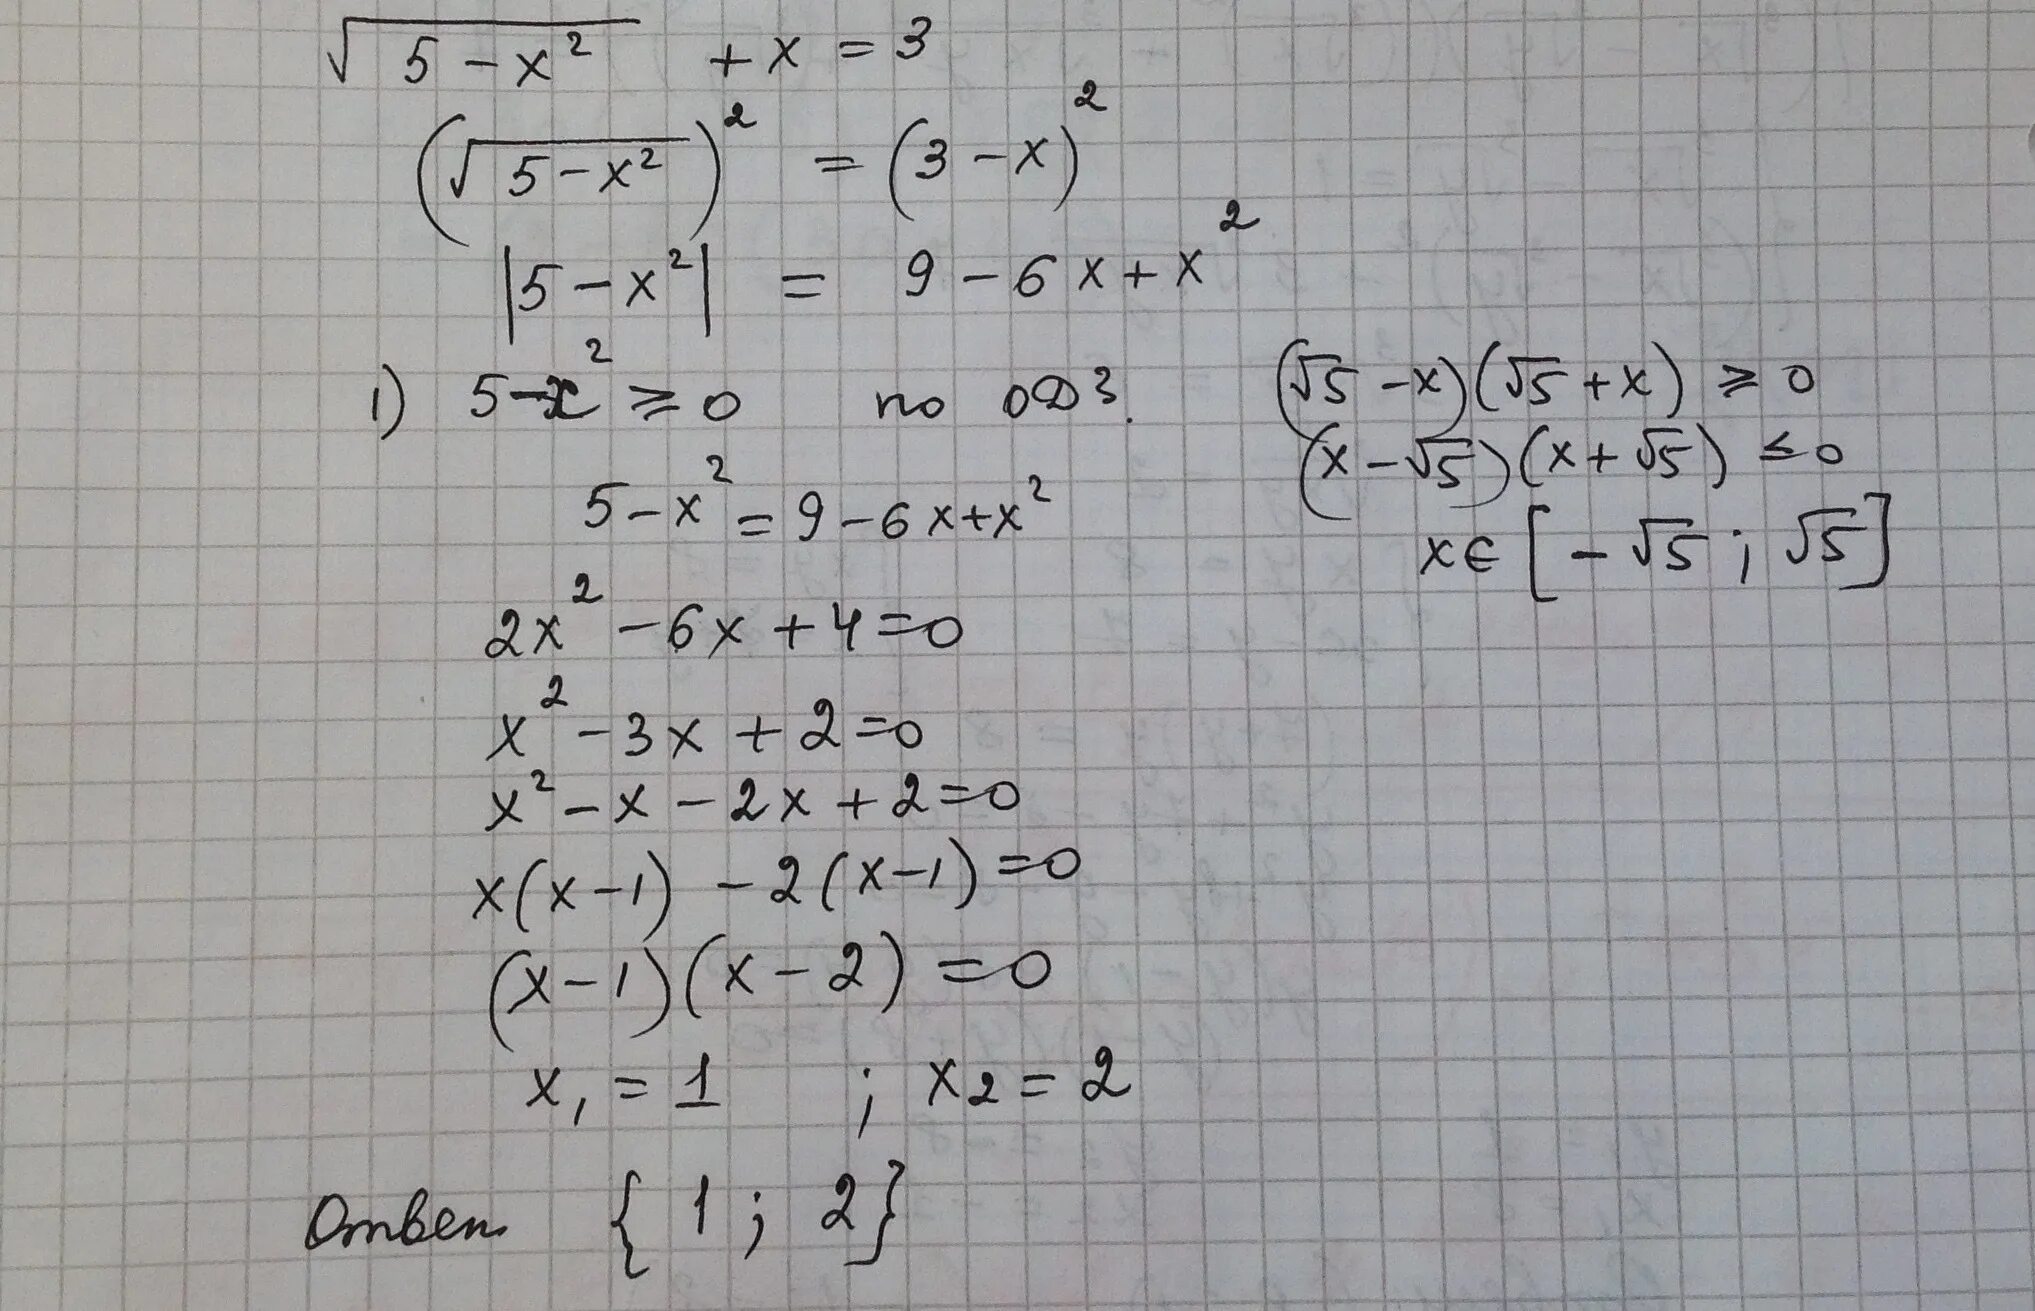 5x 2 5. X<3 решение. (X-2)(X+2)-X(X+5). (X-5)^2. (3x-5)^2+2x=5.